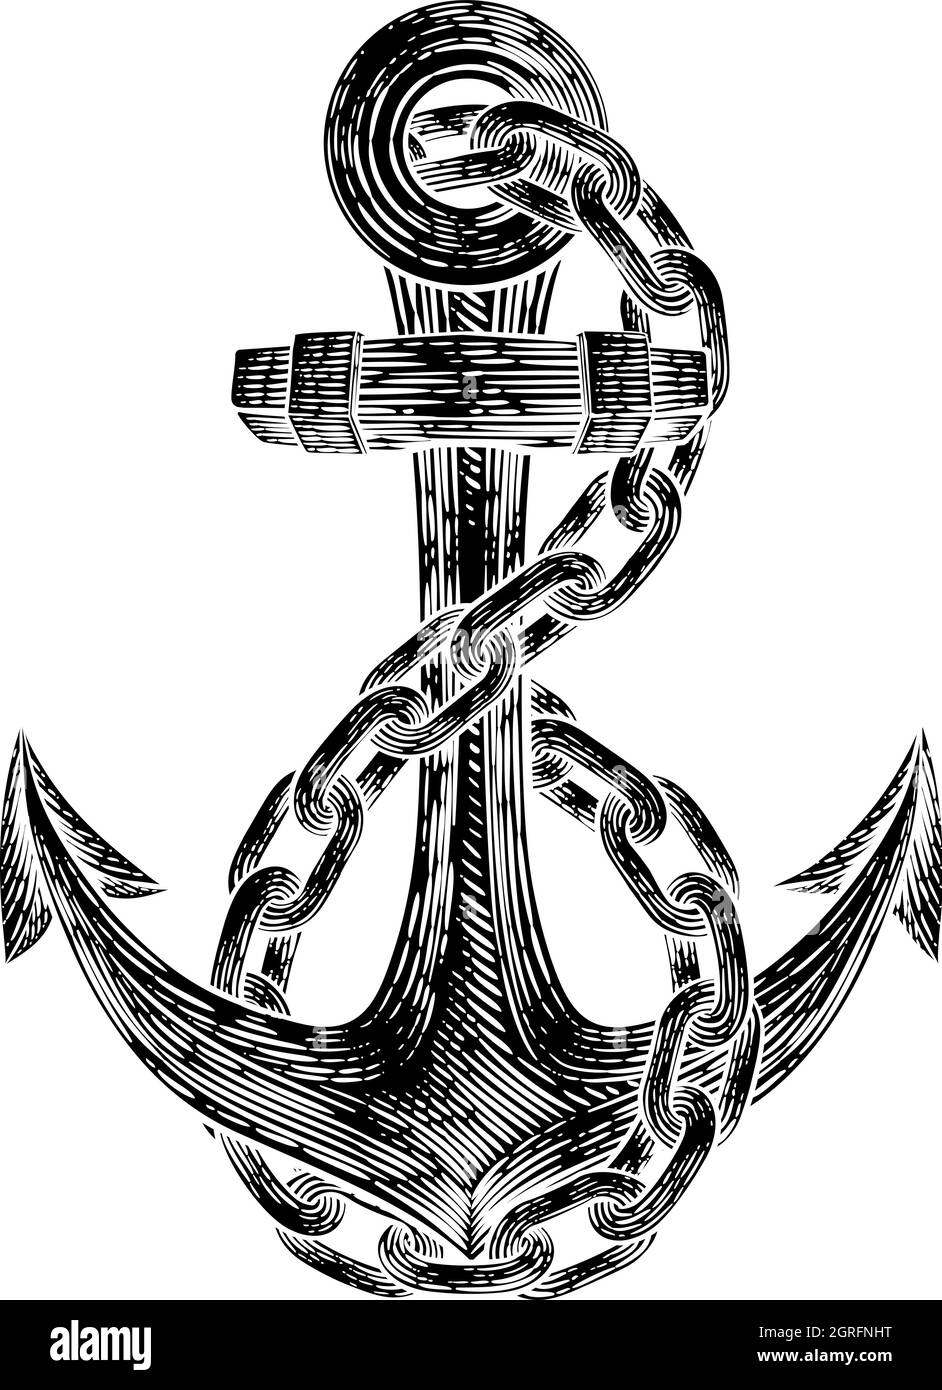 El ancla de barco o buque dibujo tatuaje Imagen Vector de stock - Alamy